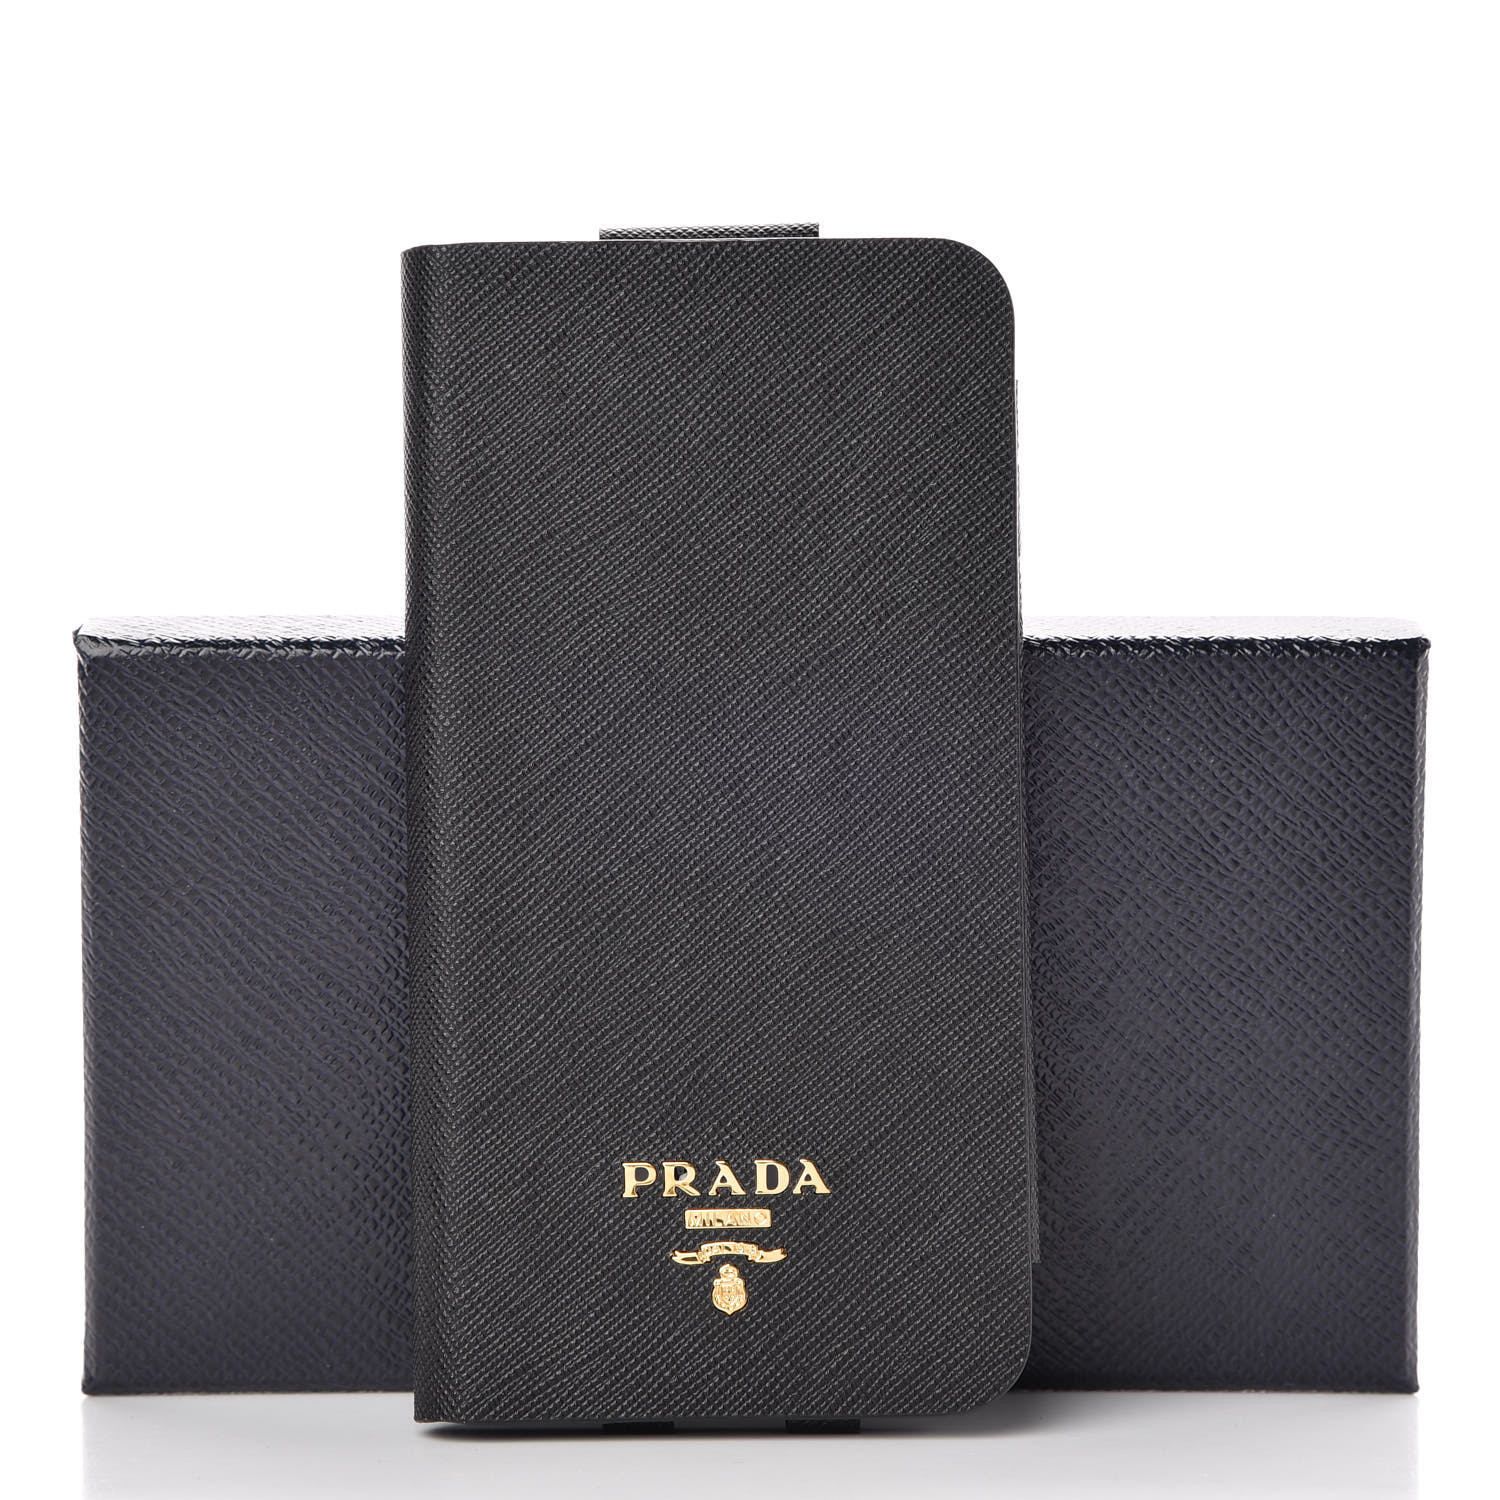 prada iphone wallet case